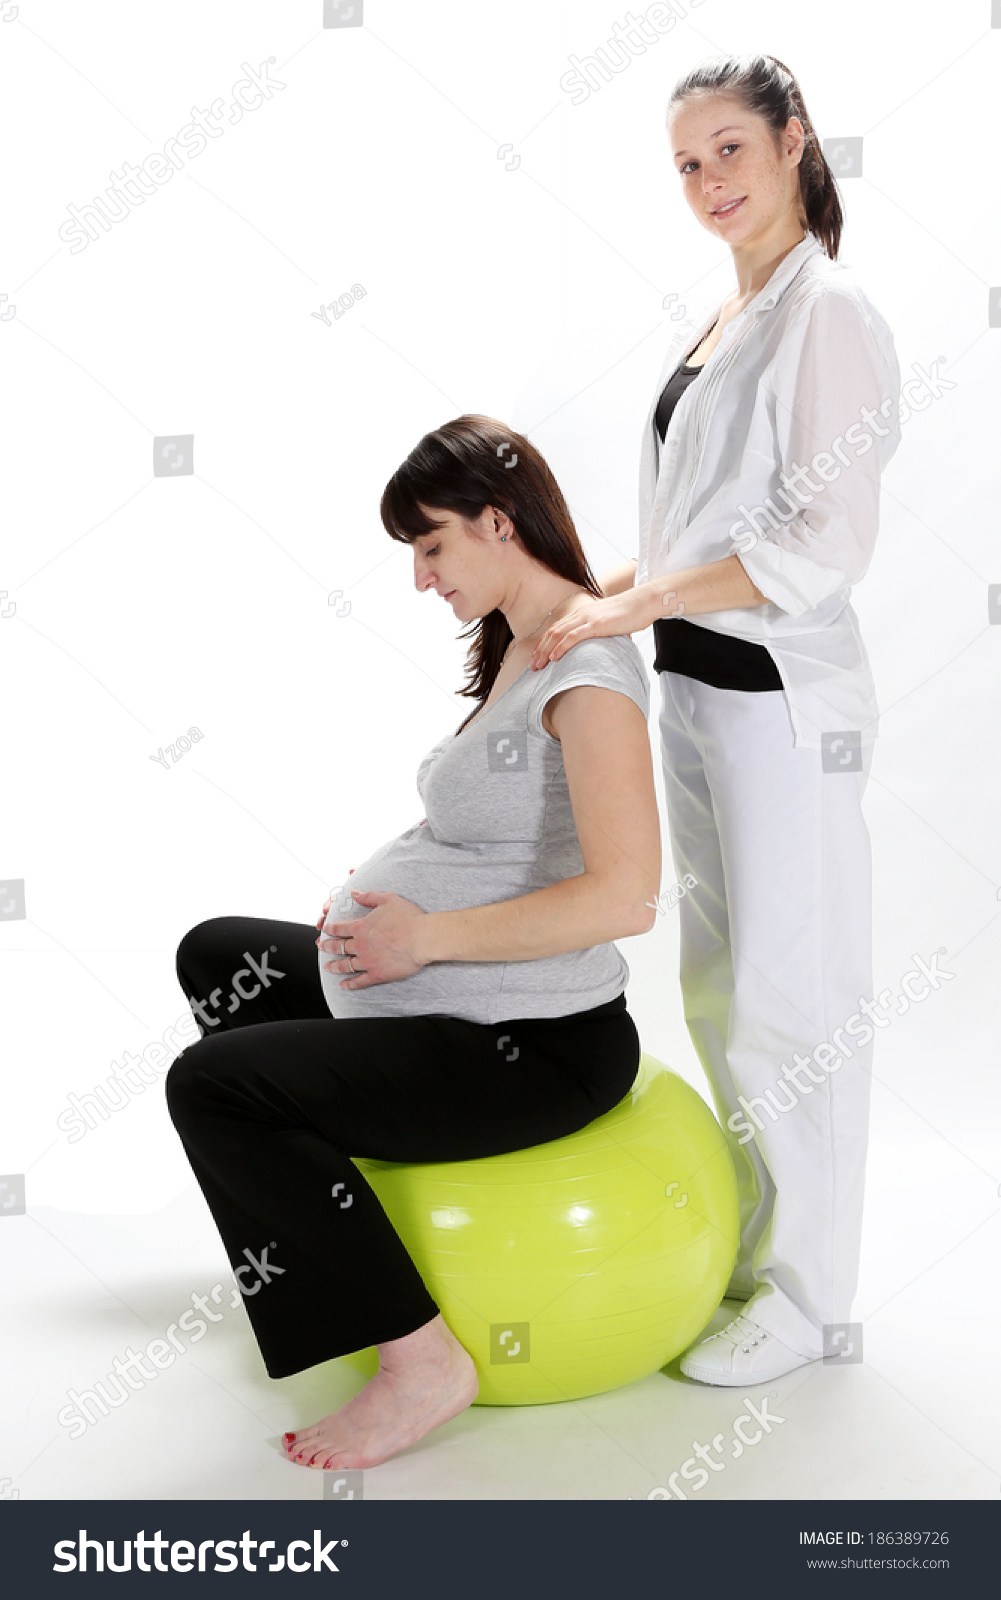 Doctor For Pregnant Women 115